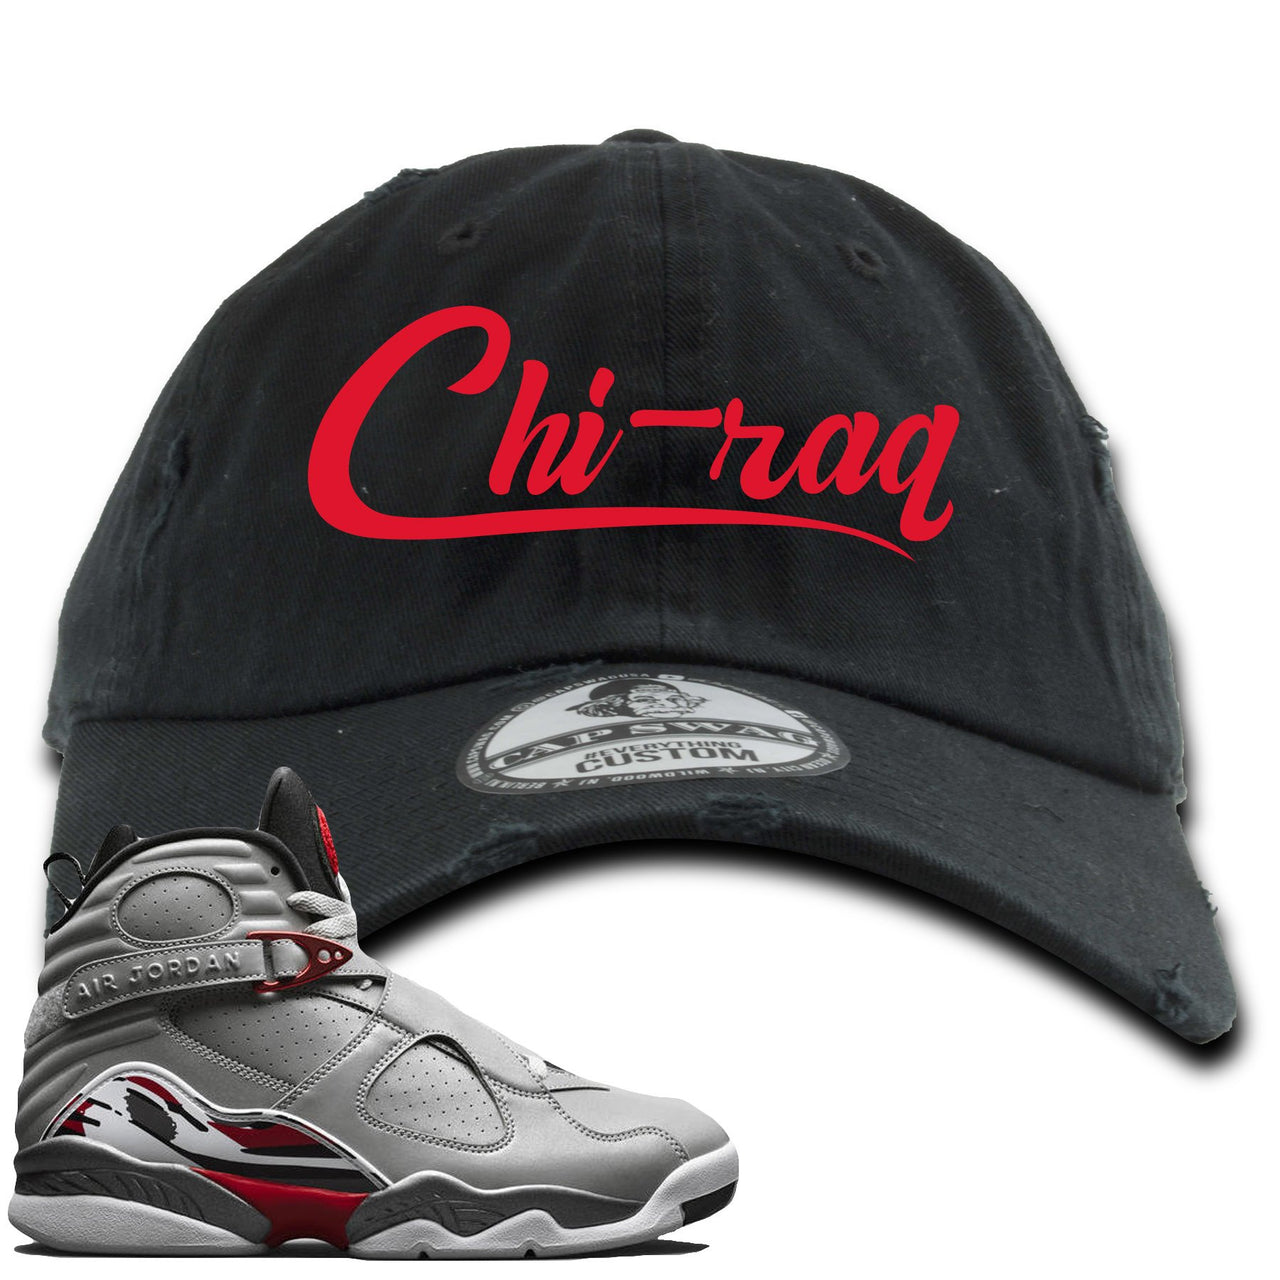 Reflections of a Champion 8s Distressed Dad Hat | Chiraq Script, Black